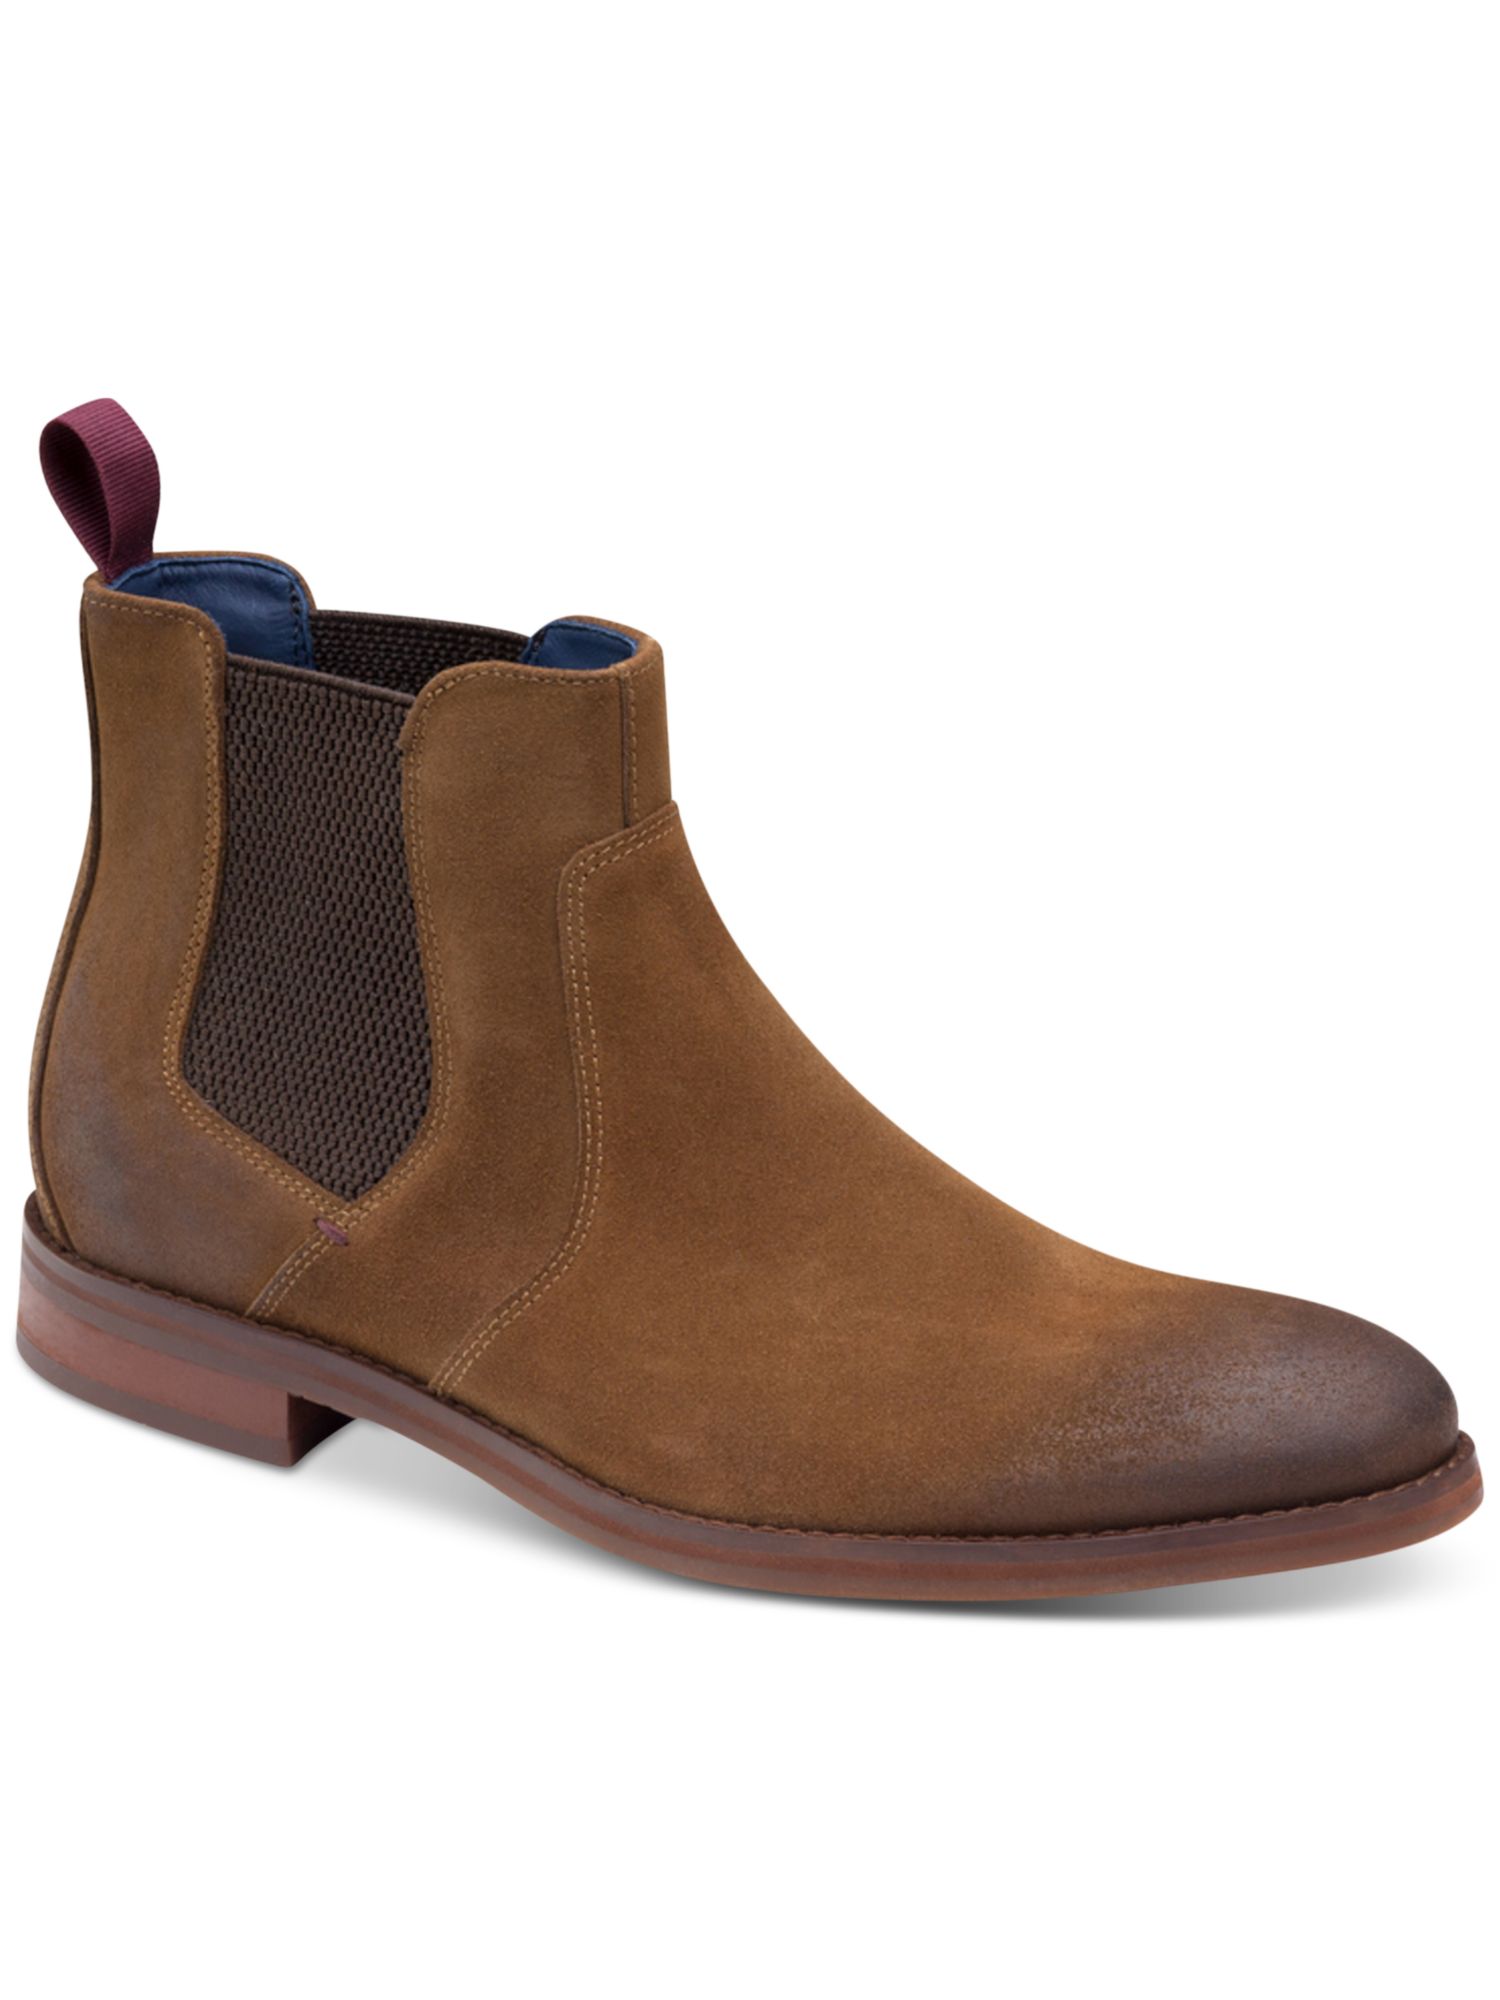 JOHNSON & MURPHY Mens Brown Goring Comfort Danby Round Toe Dress Boots Shoes 9.5 M